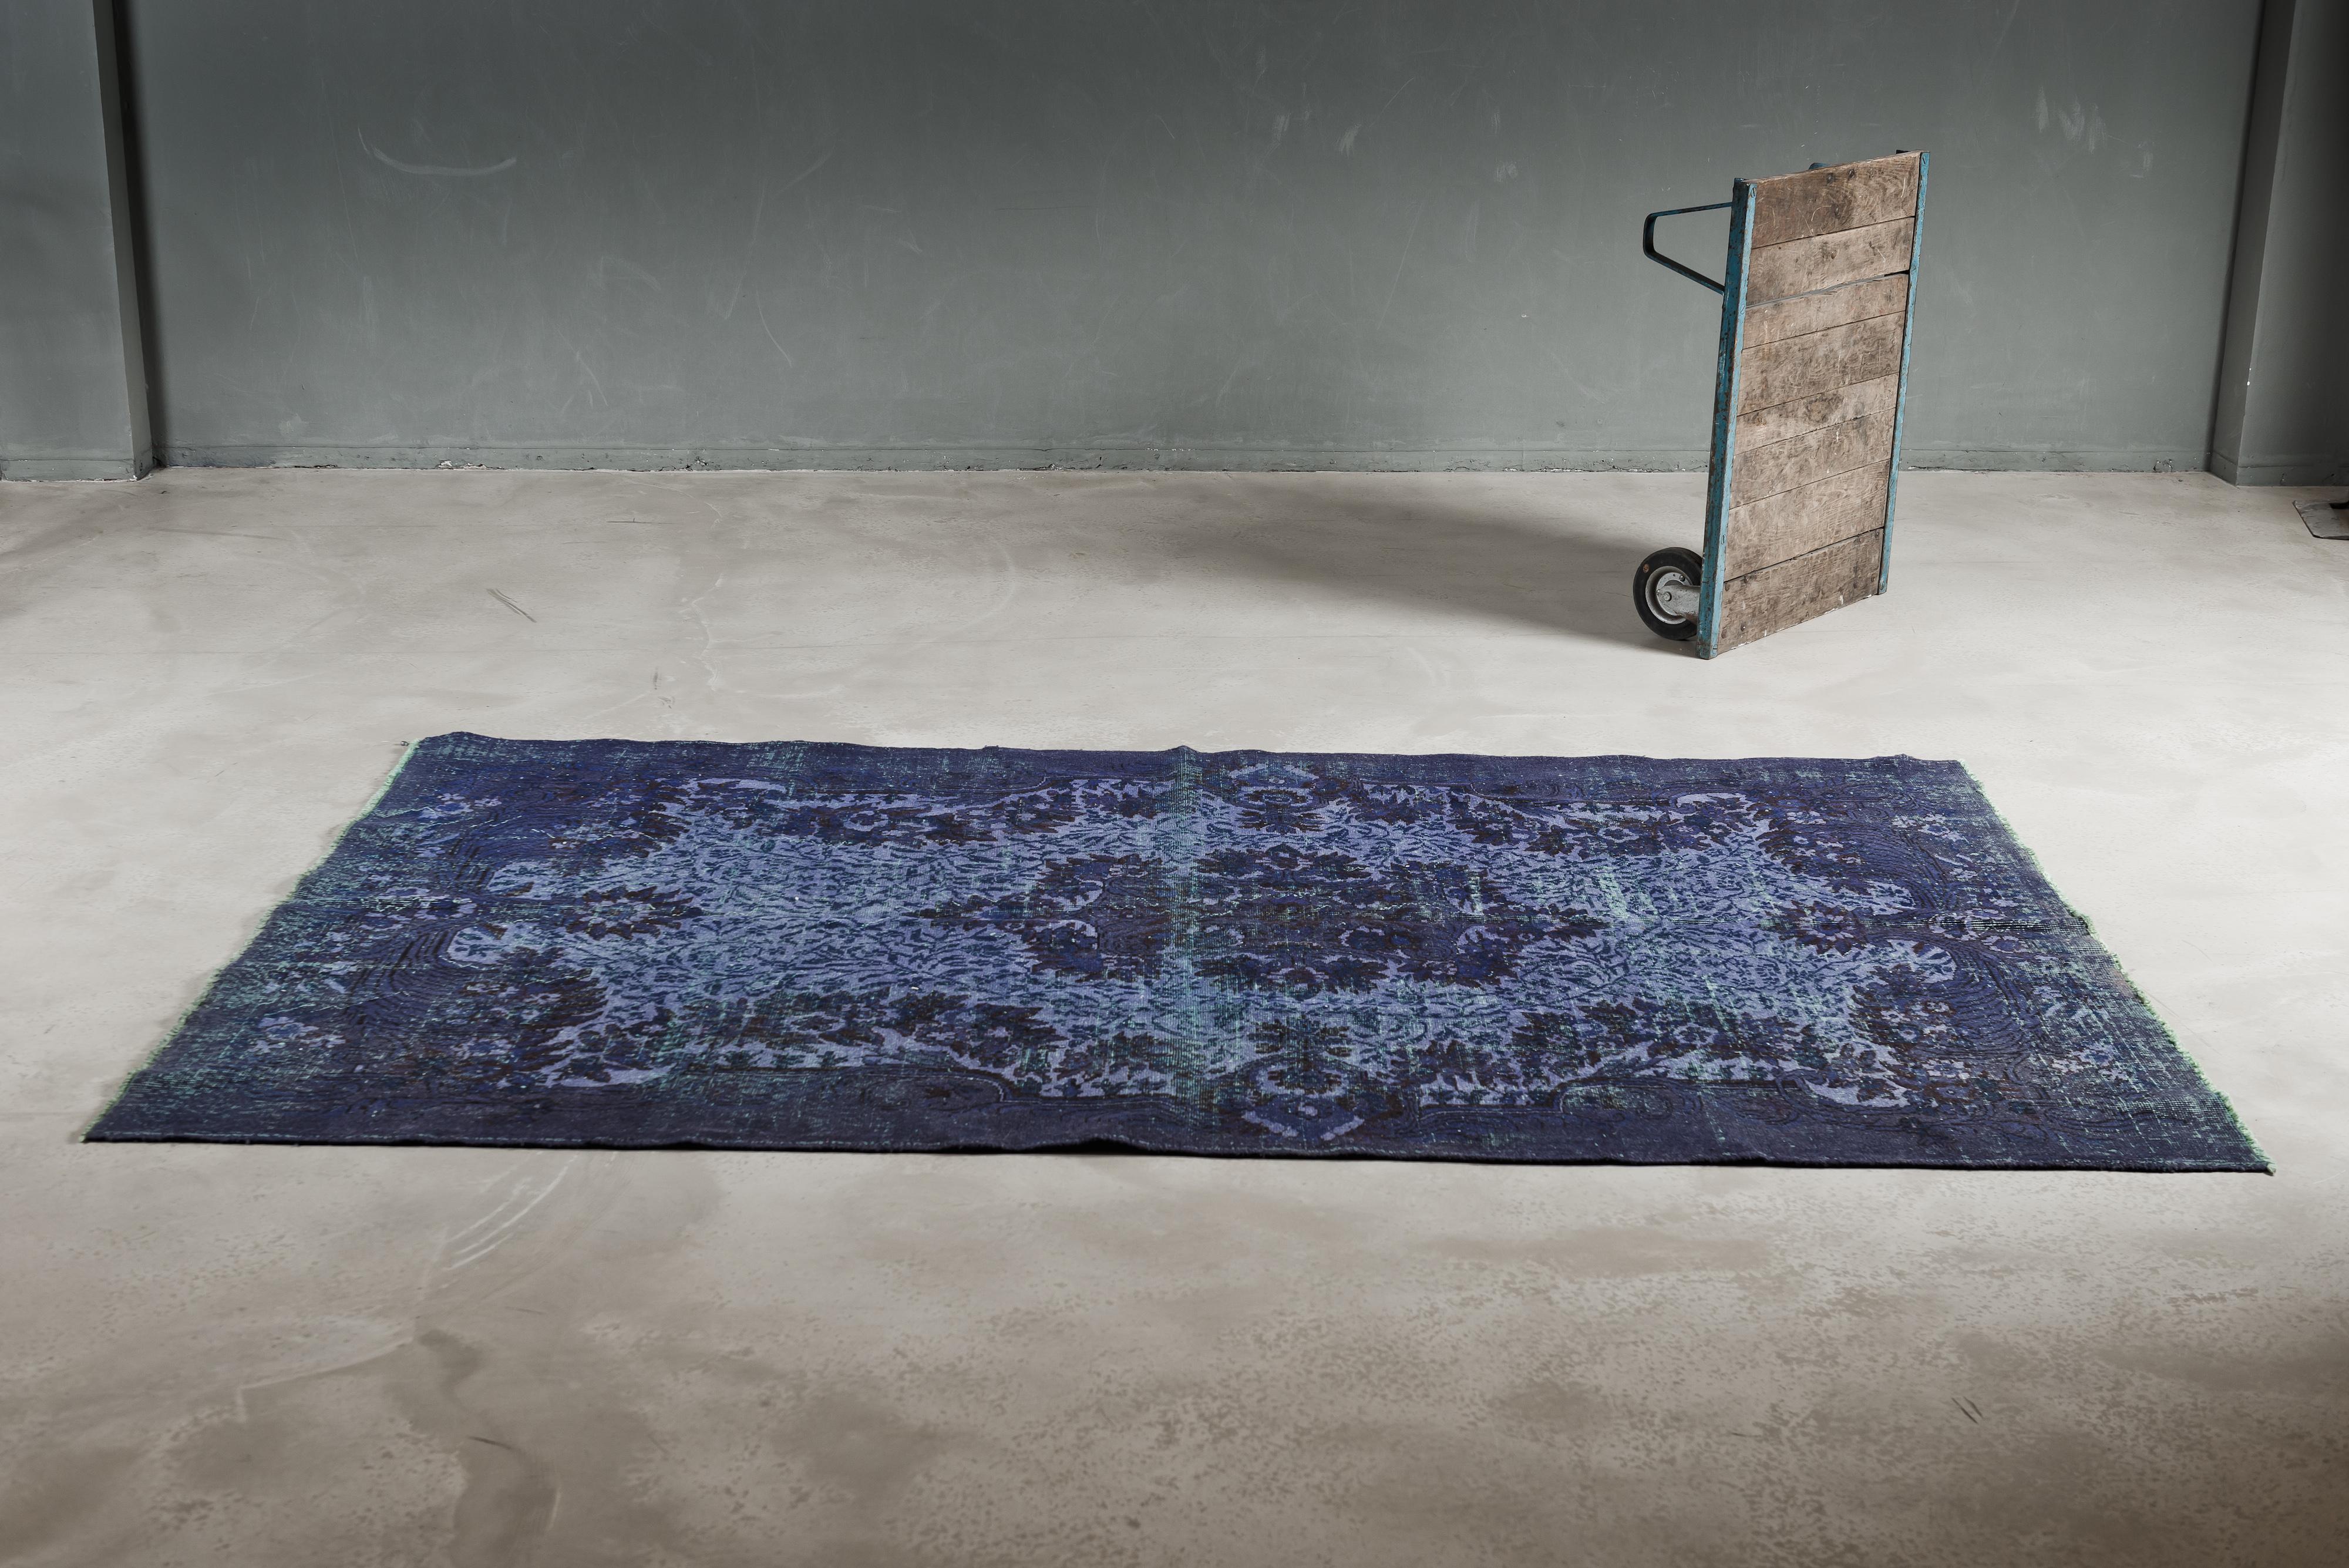 Vintage Teppich in strahlendem Blau #teppich ©THE KNOTS